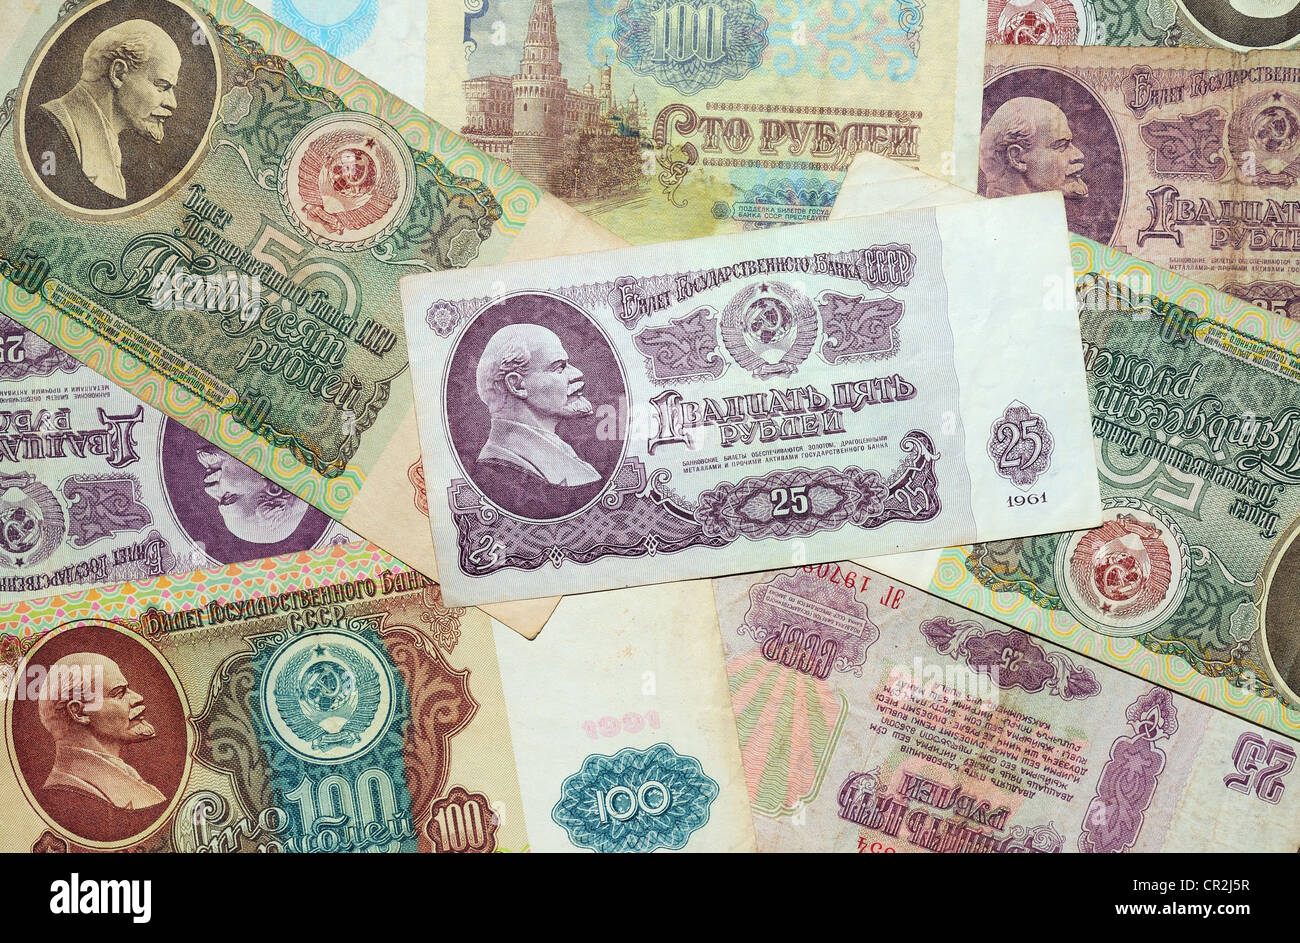 Historische Banknoten, Sowjetunion Rubel 1961-1991 Stockfoto